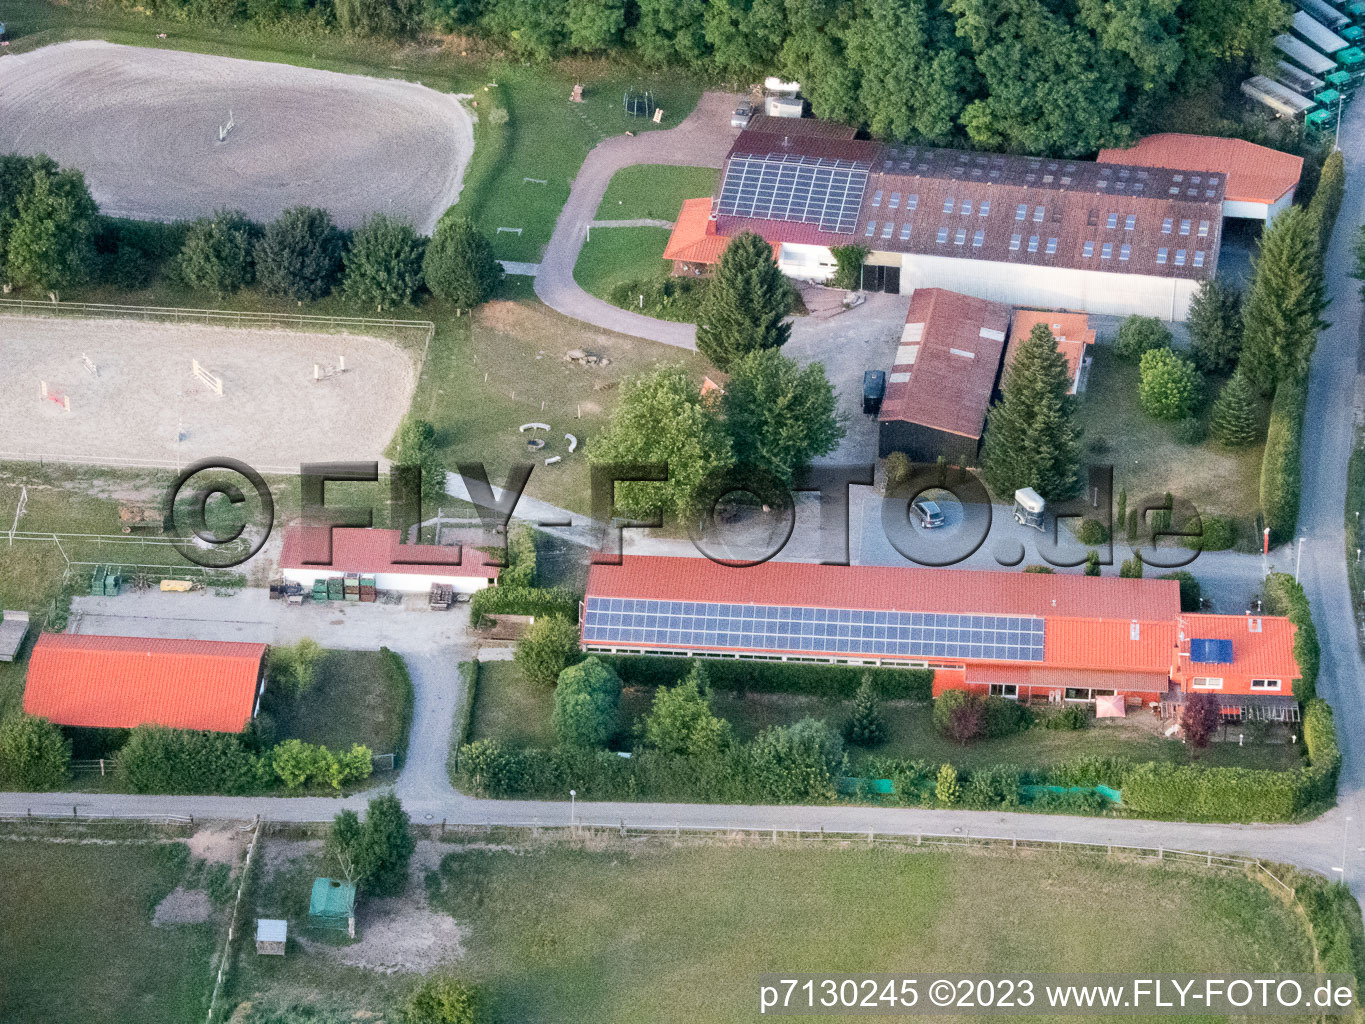 District Herxheim in Herxheim bei Landau/Pfalz in the state Rhineland-Palatinate, Germany from a drone